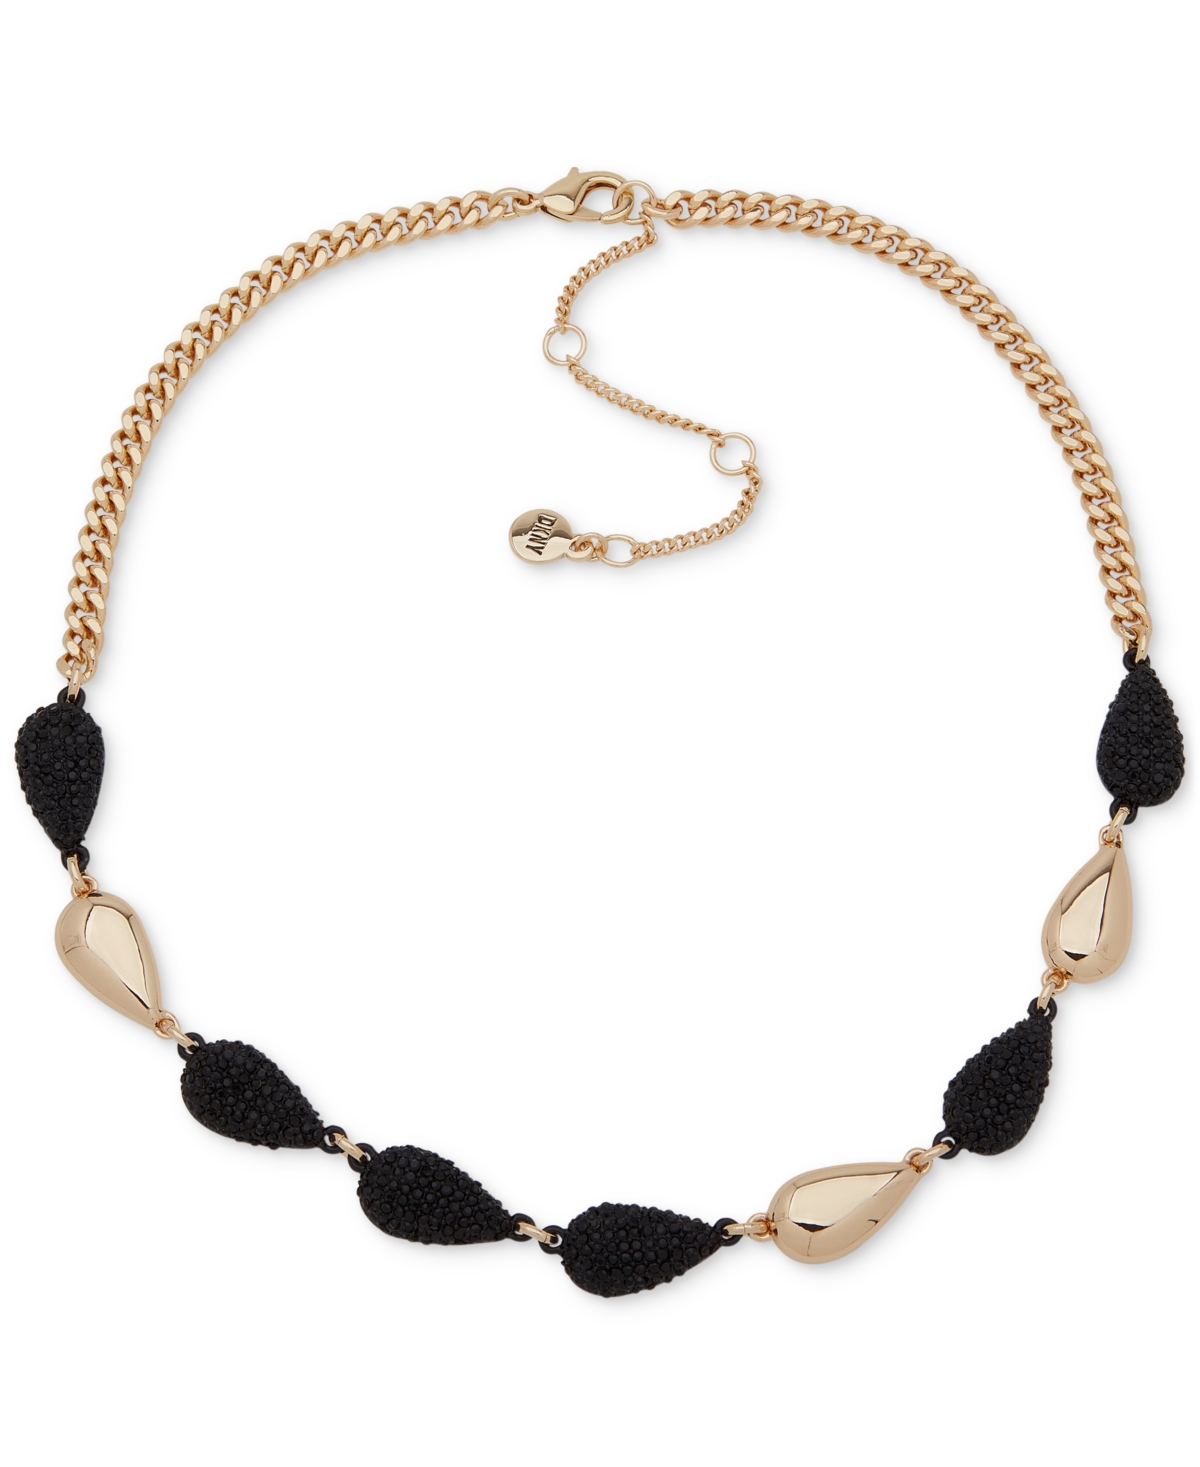 Gold-Tone Black Pave Crystal Statement Necklace, 16" + 3" extender - Black